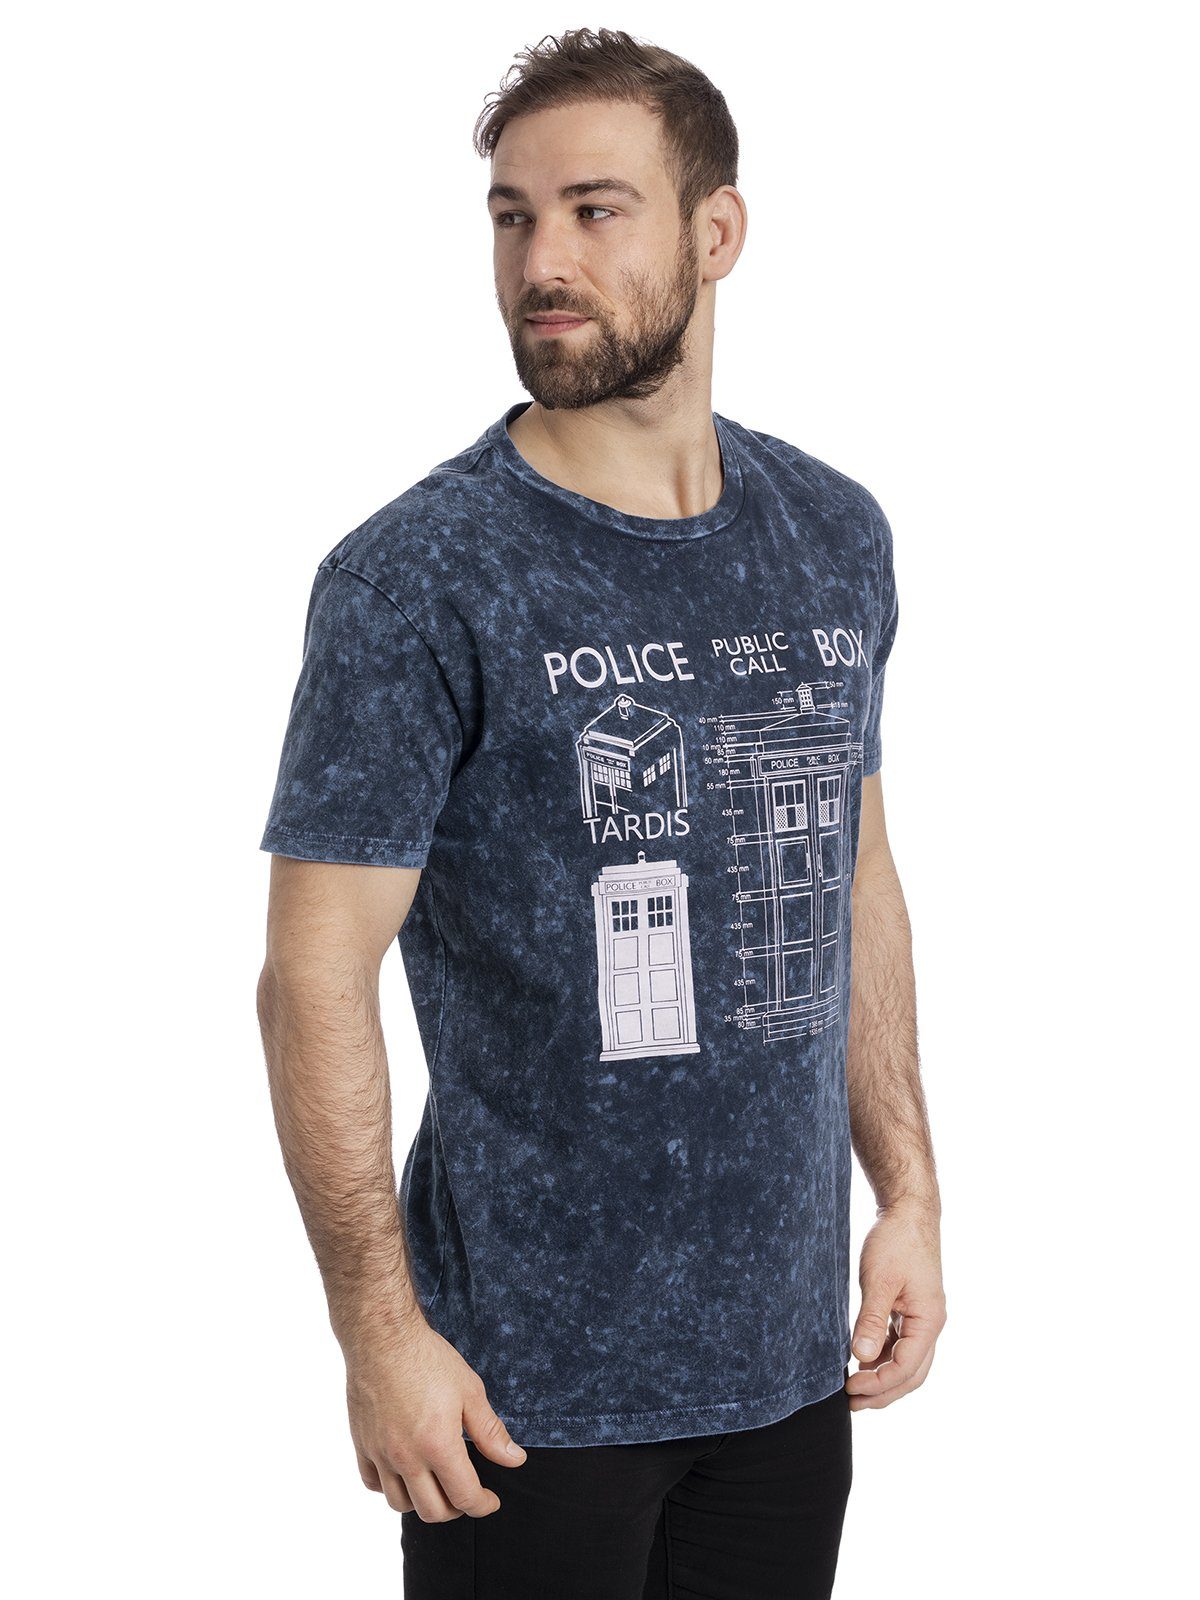 T-Shirt Box Police Batik Doctor Potsdam Who Blueprint Nastrovje